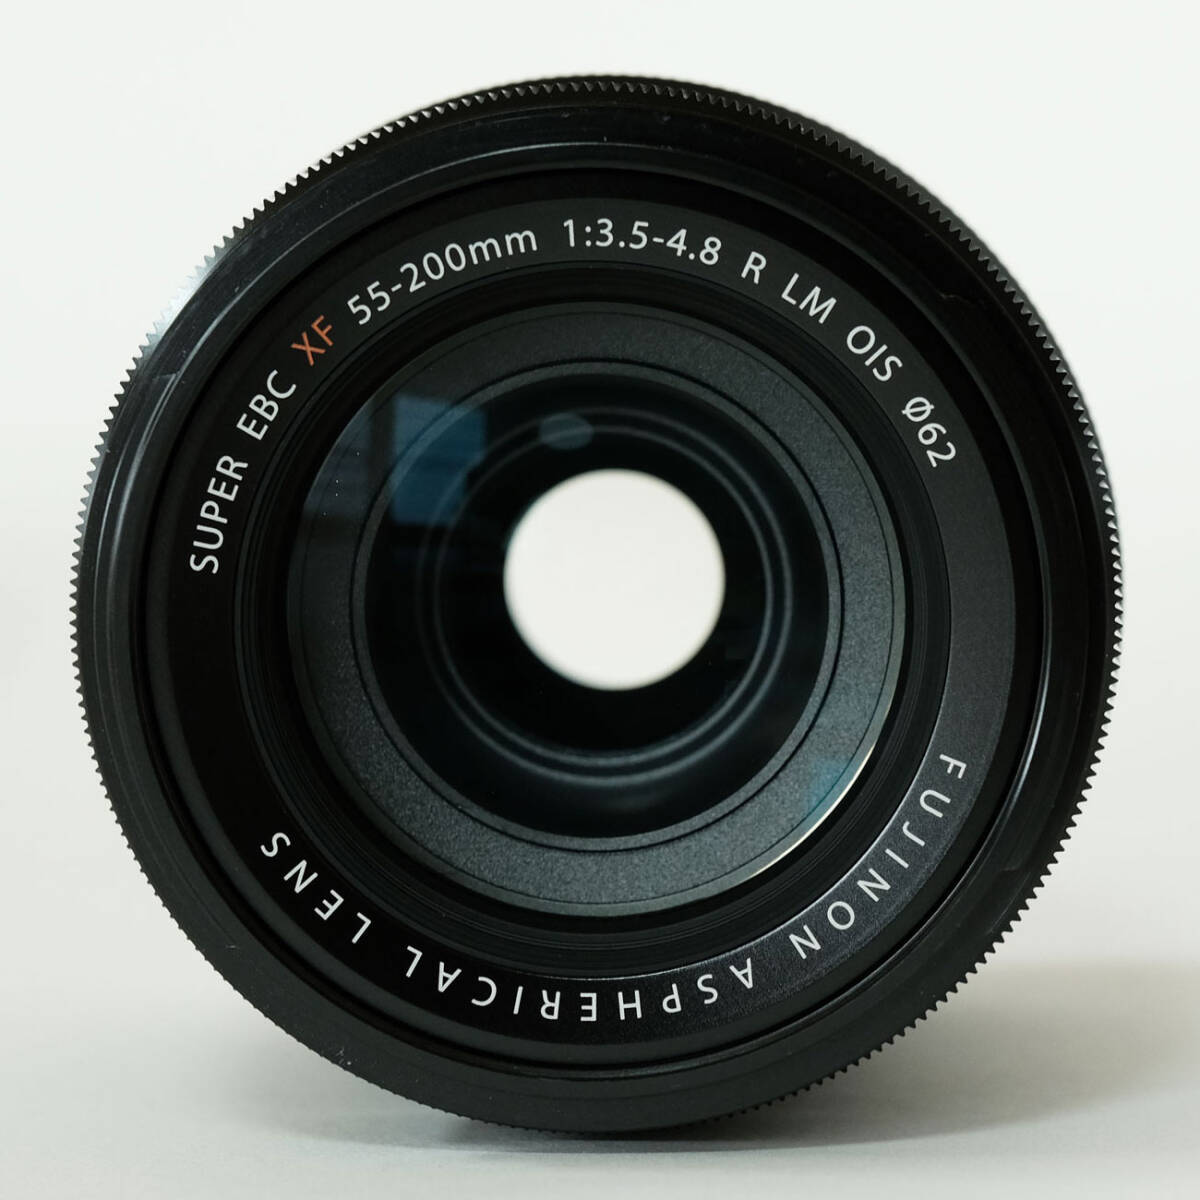 [ superior article ] FUJIFILM XF55-200mmF3.5-4.8 R LM OIS / Fuji Film X mount / APS-C